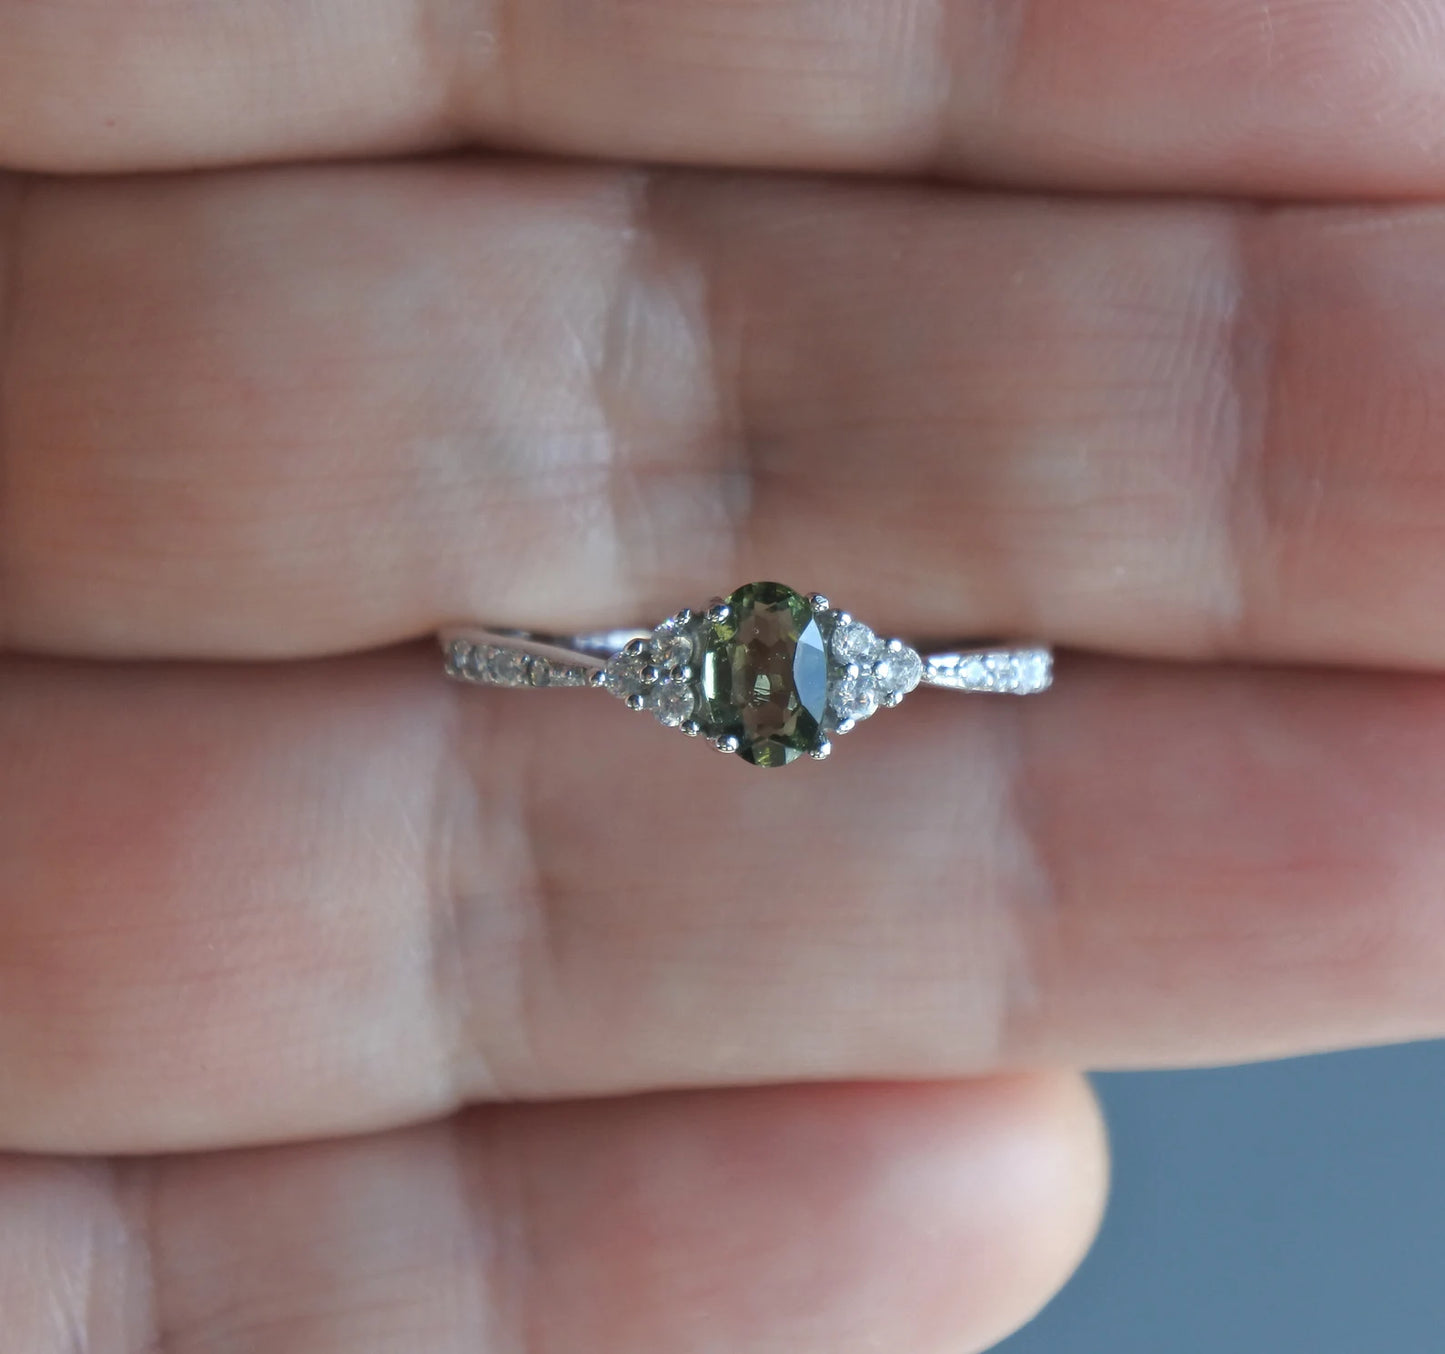 Silver Moldavite Ring 4x6 mm stone, Authentic Moldavite jewelry- Genuine Moldavite gemstone ring, Faceted moldavite ring real moldavite gift